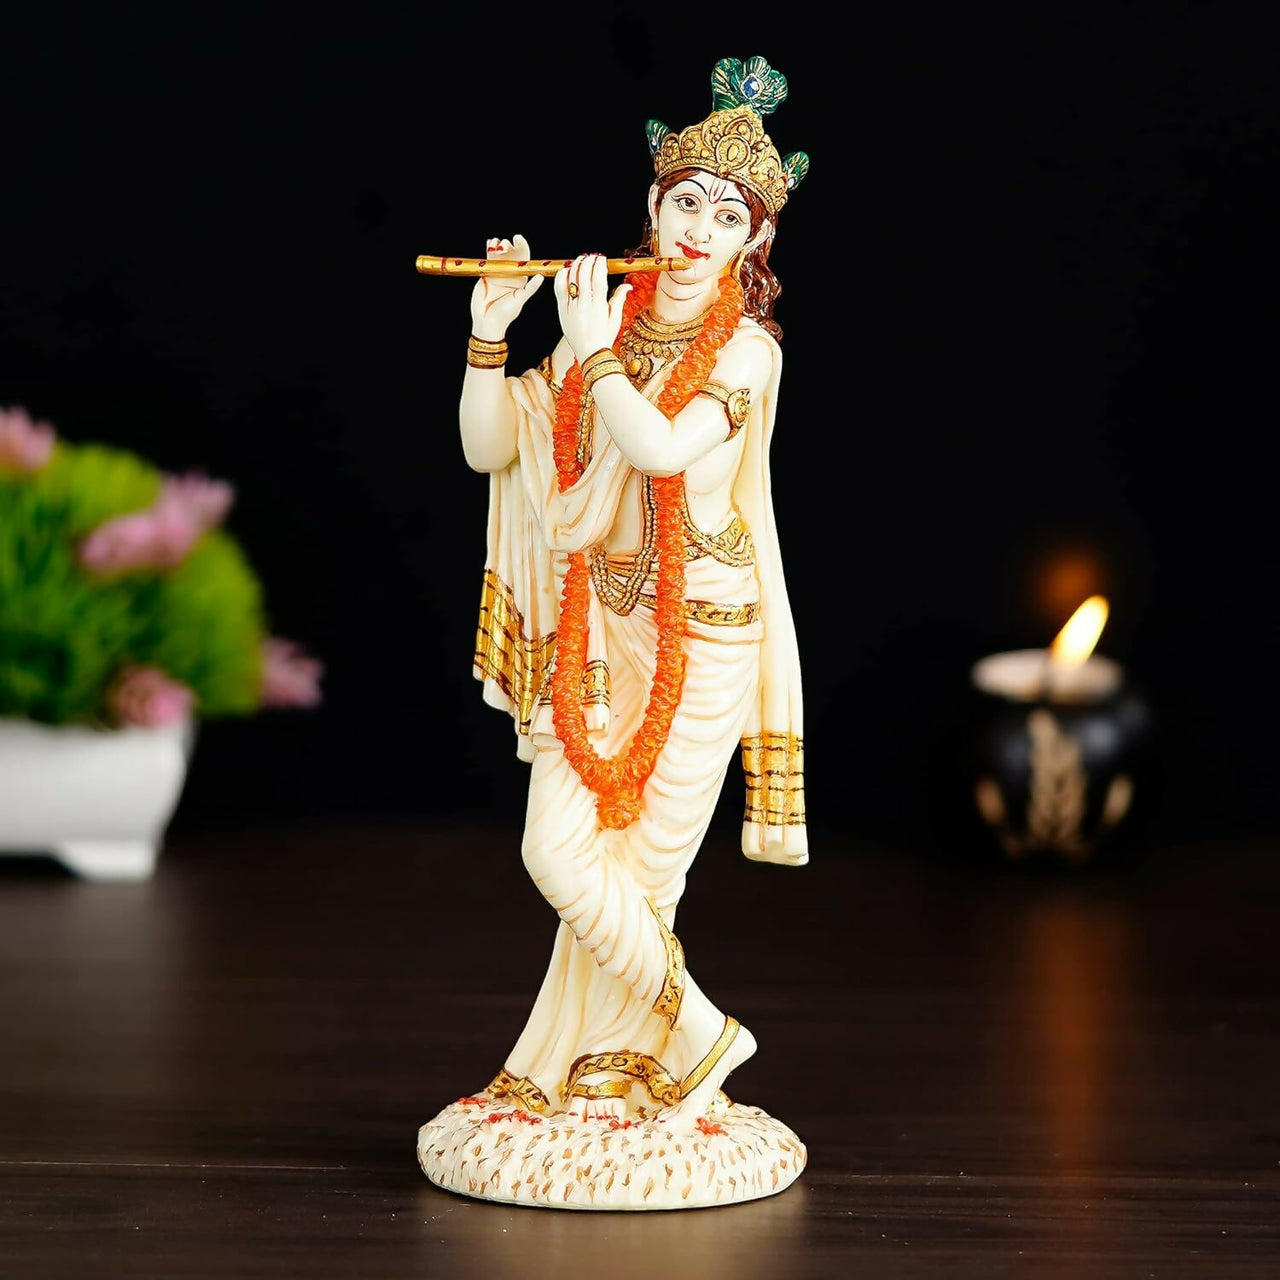 Shyam Antique Creation Lord shri Krishna Playing Flute Standing kanha Idol - Distacart